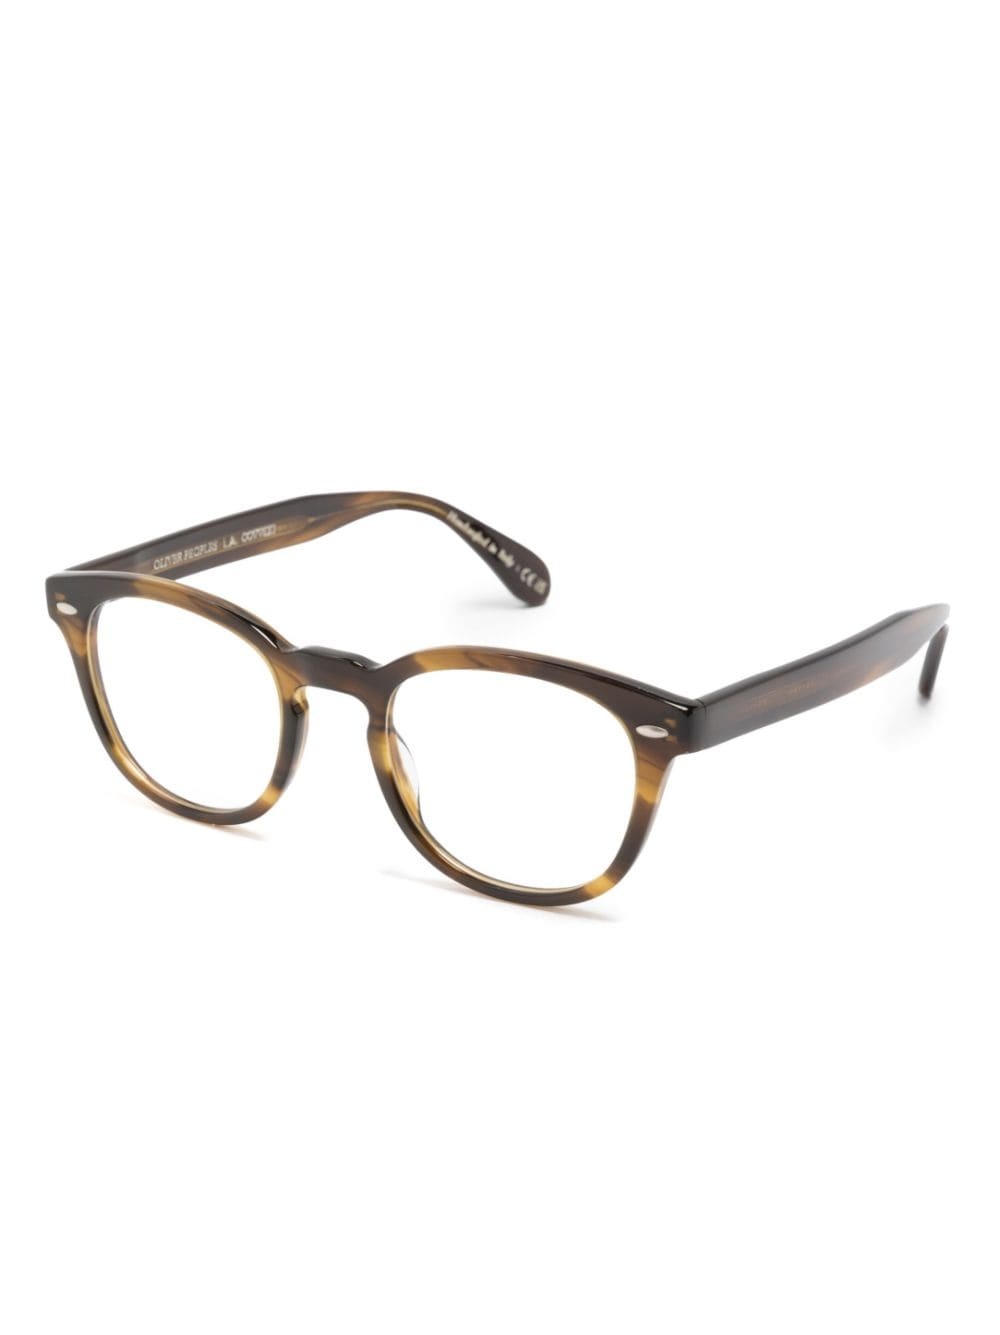 tonal-design round-frame glasses - 2